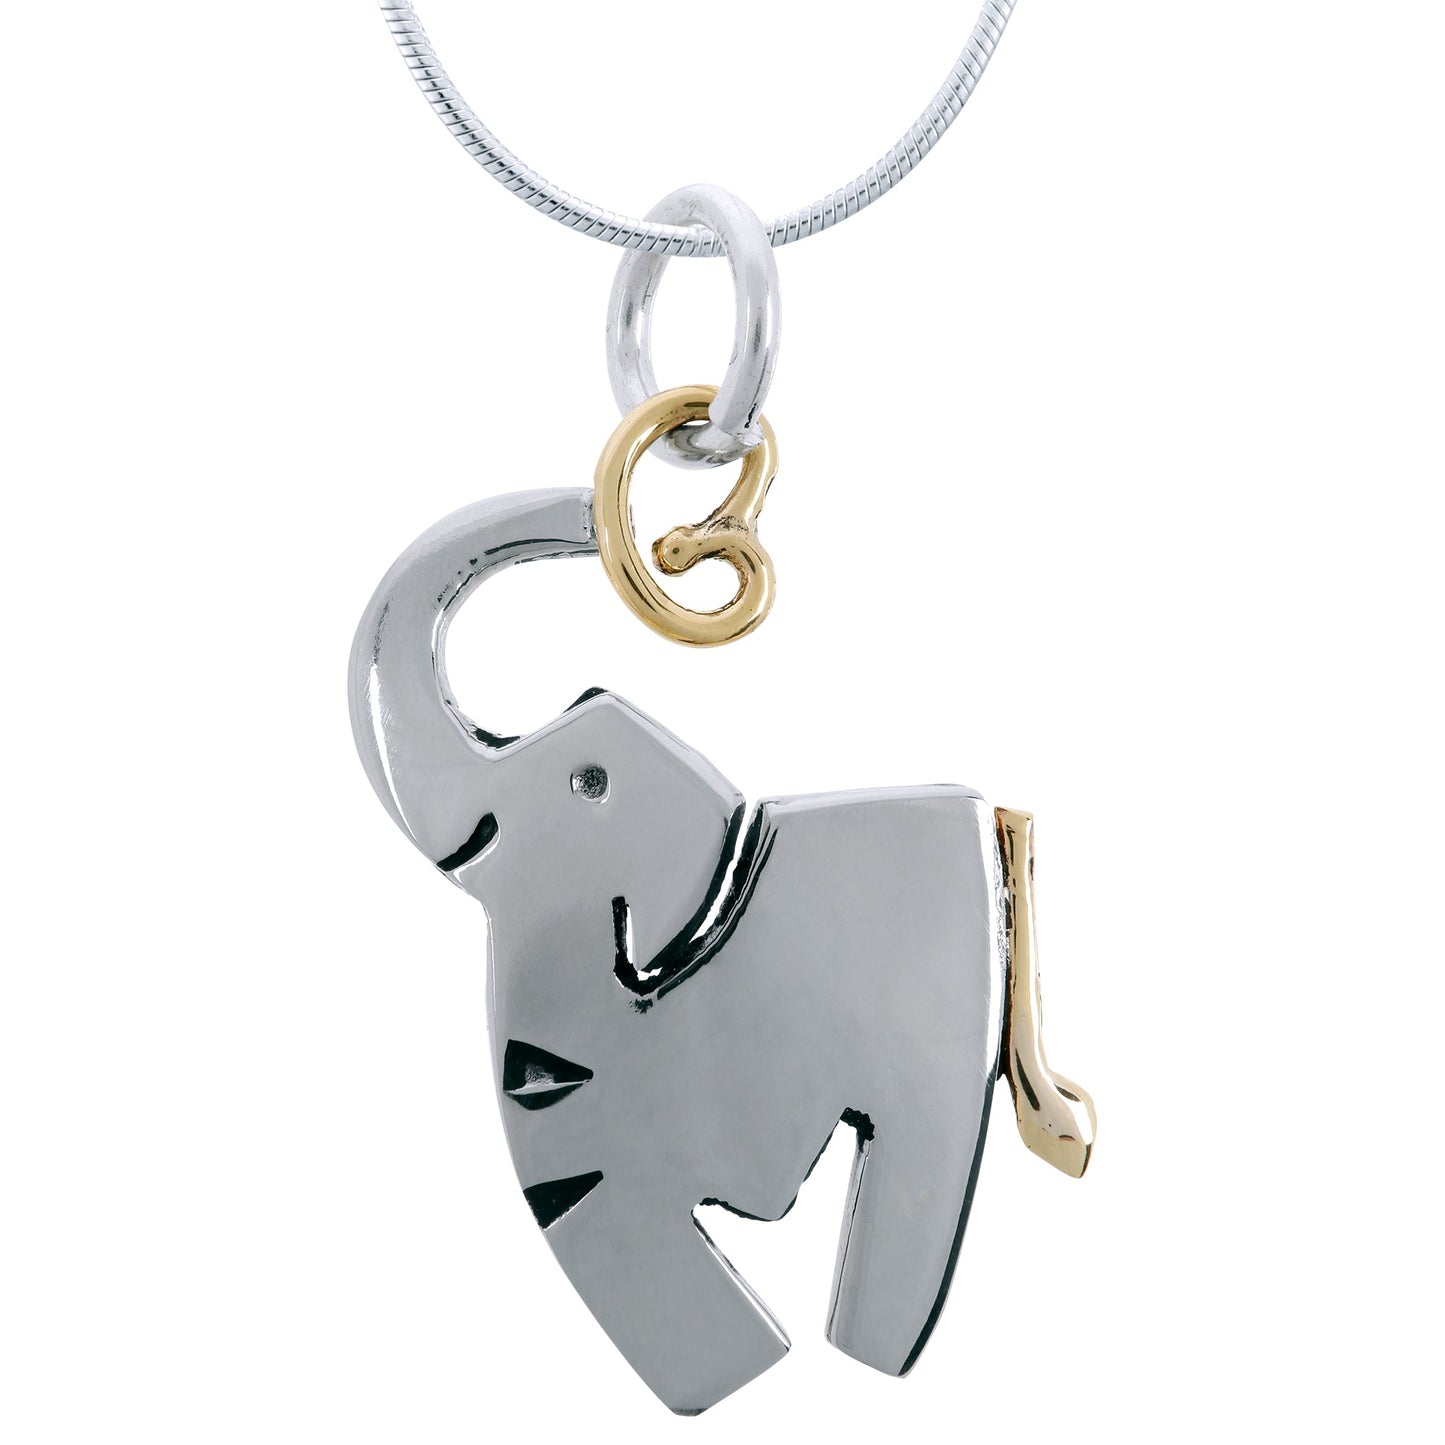 Sweet Dancing Elephant Necklace